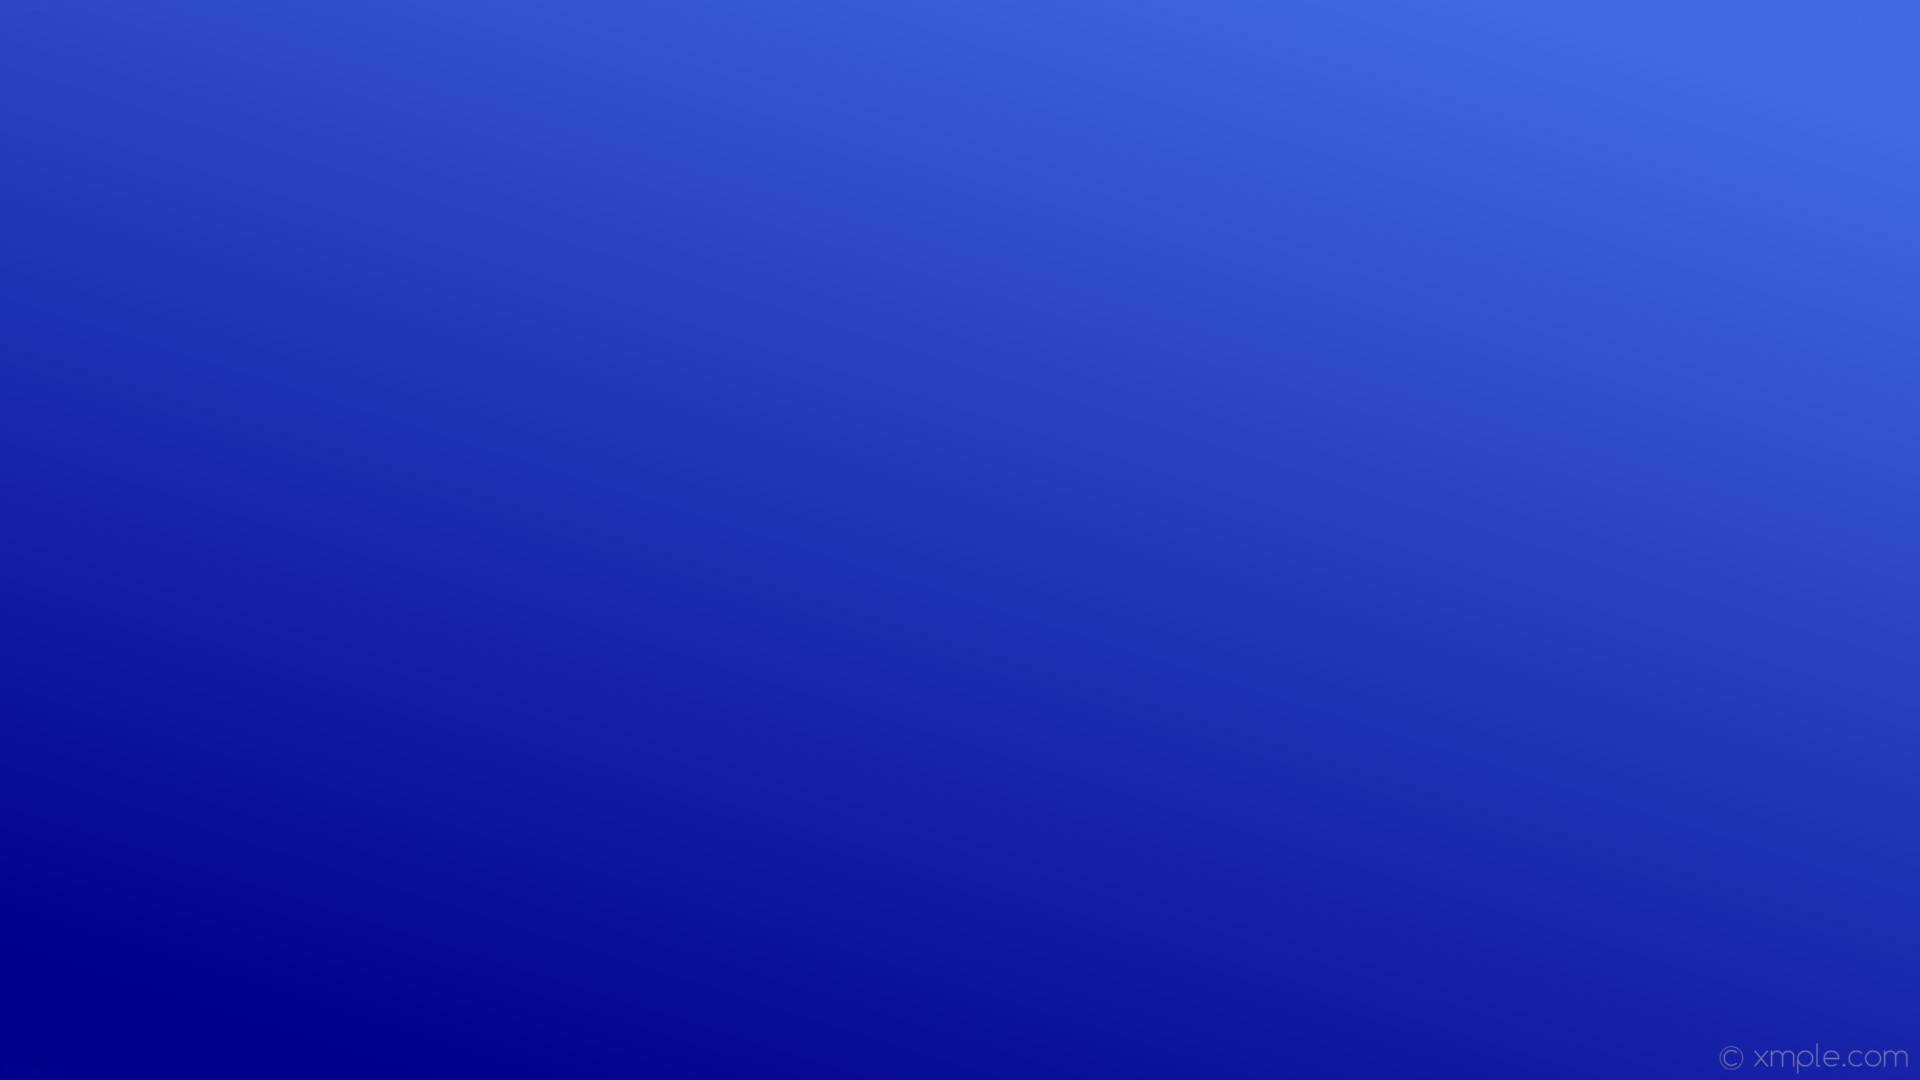 1920x1080 wallpaper blue gradient linear royal blue dark blue #4169e1 #00008b 45Â°